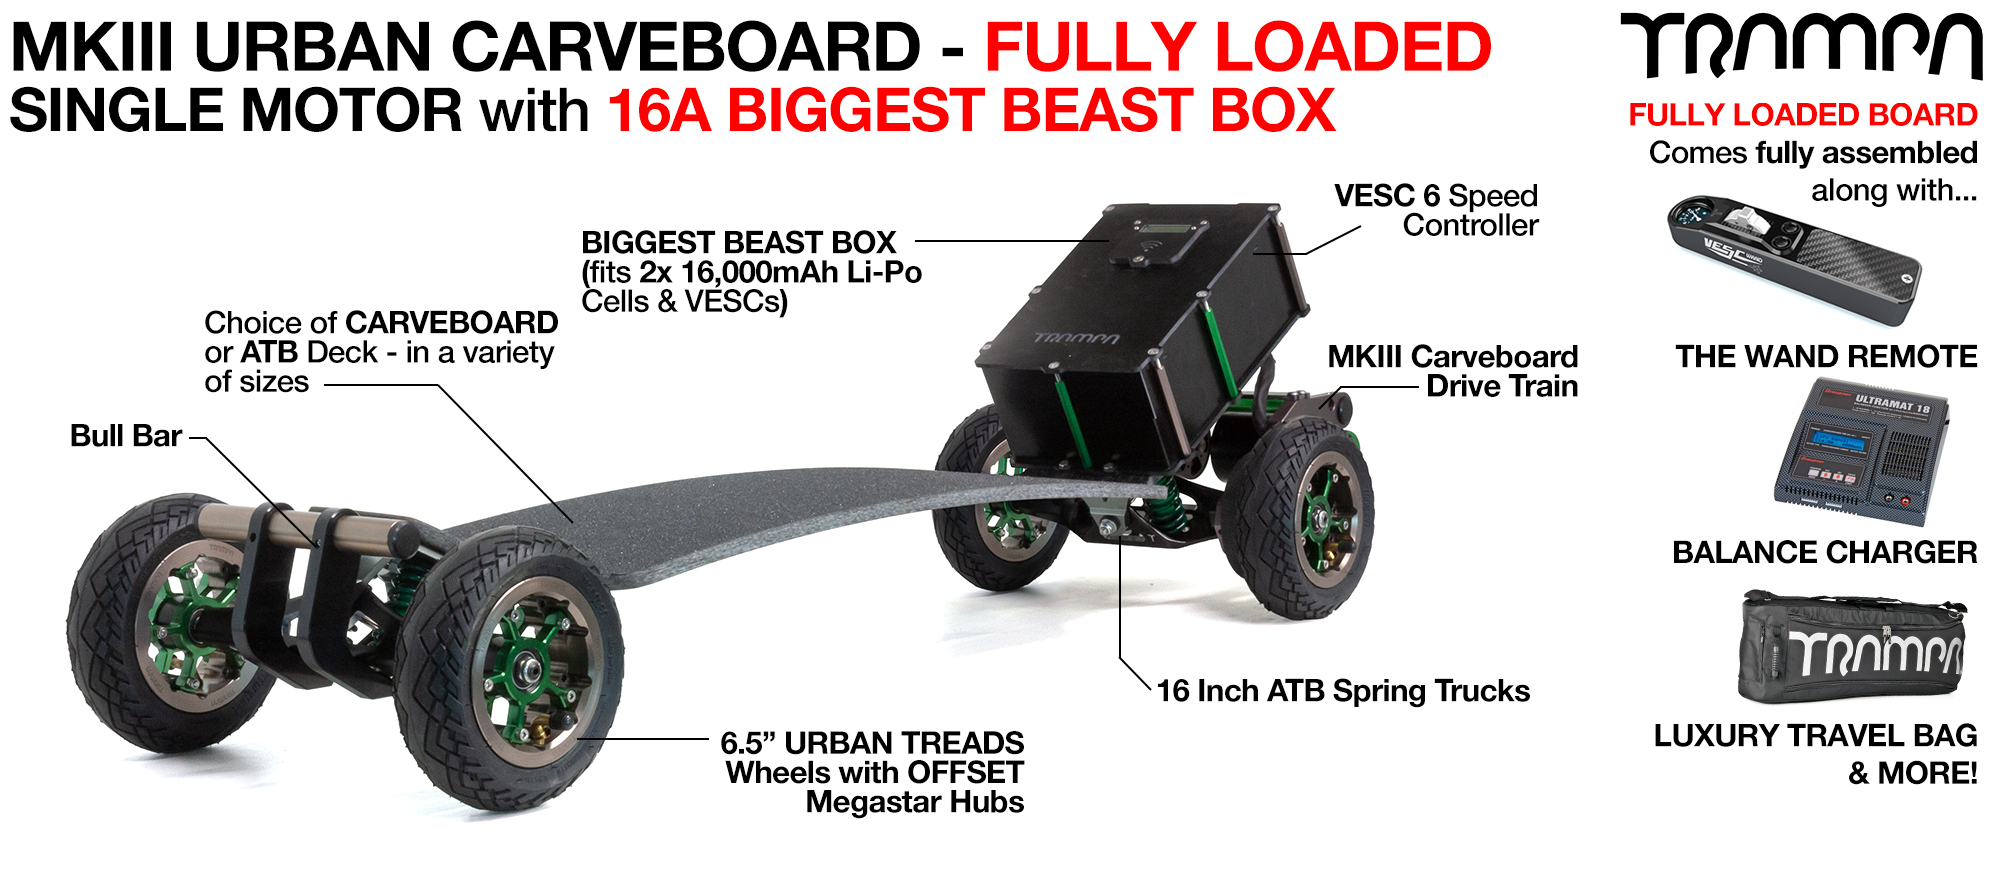 TRAMPA's MkIII Electric URBAN Carveboard - uses Mini Spring Trucks with MkIII Carve board Motor Mount's Custom TRAMPA hubs & 125mm URBAN longboard Tyres - SINGLE Motor 16A FULLY LOADED MEGASTAR